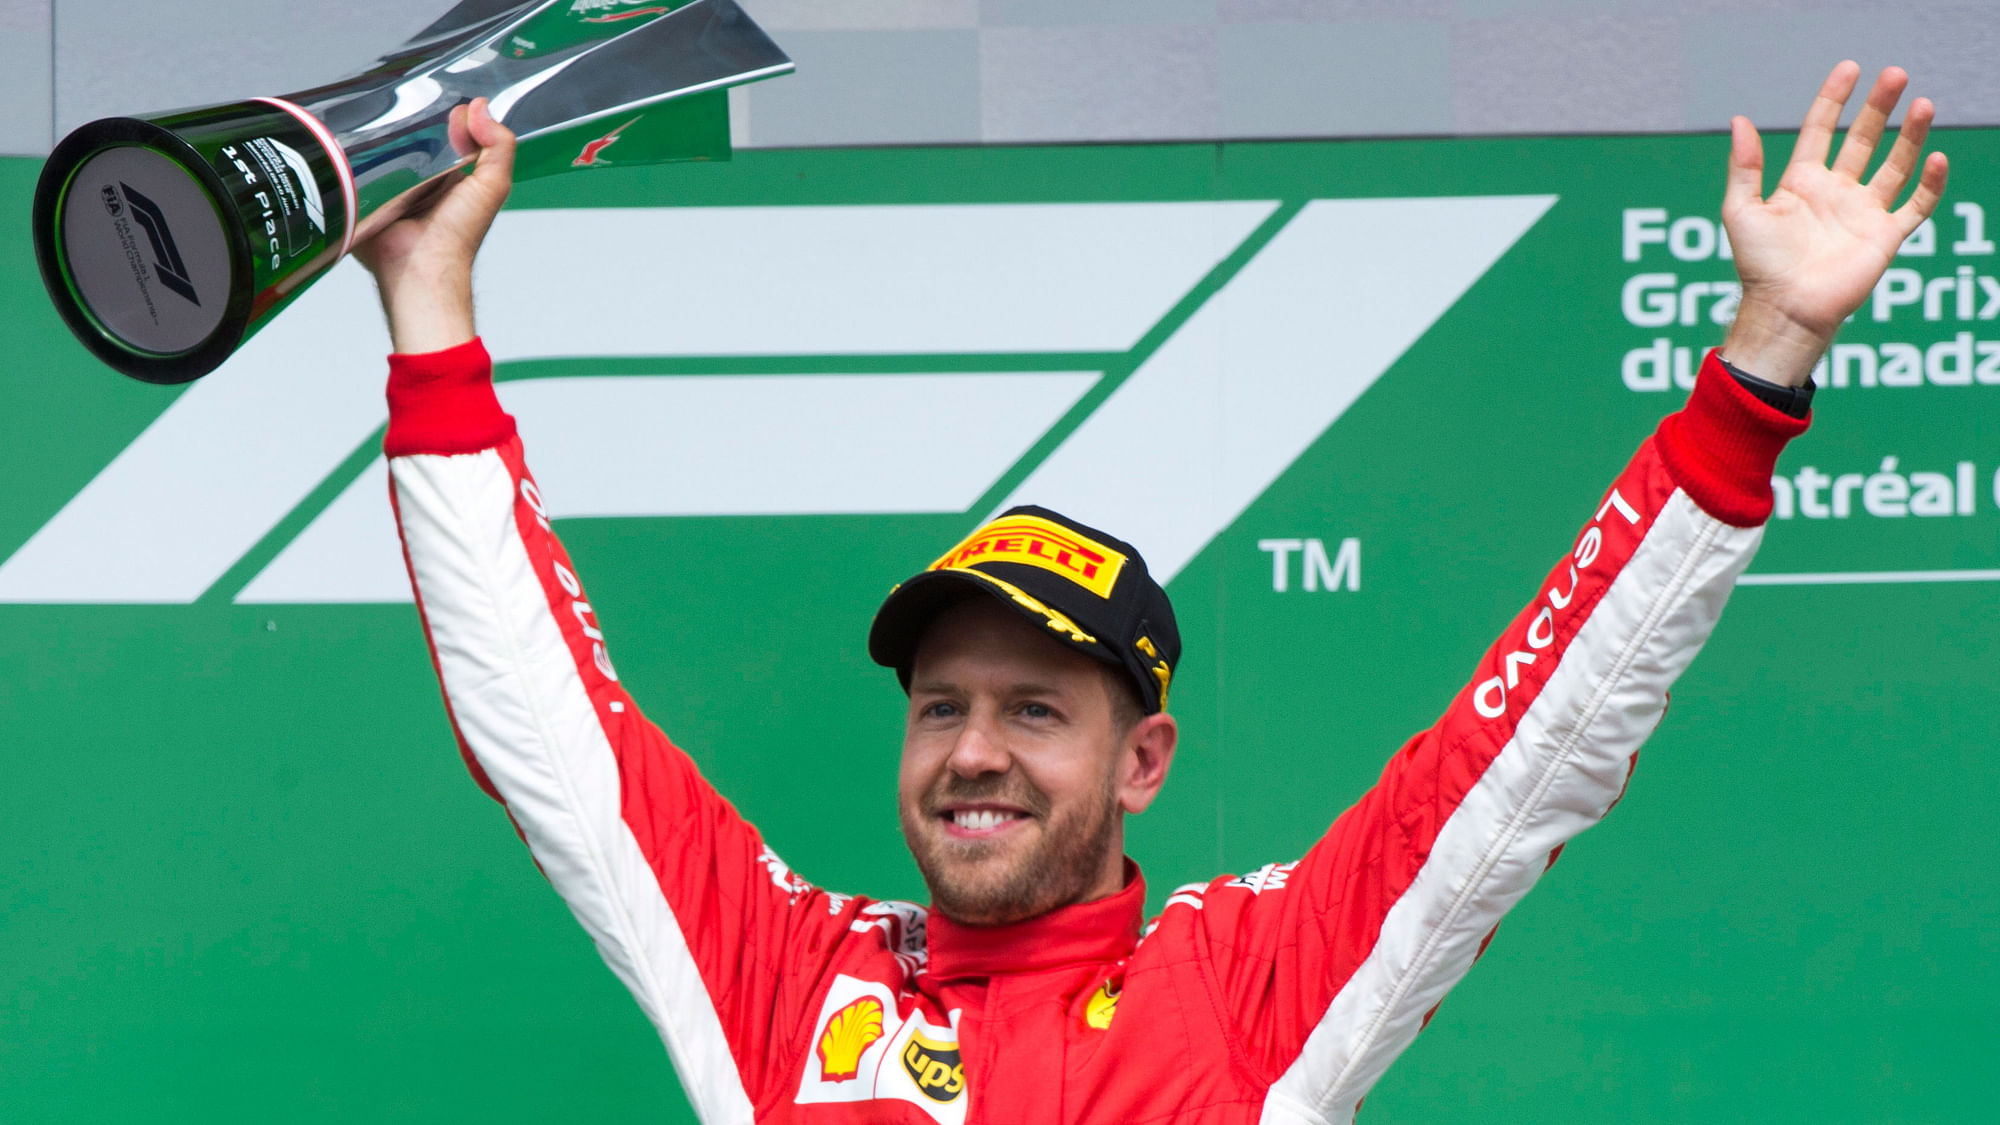 Ferrari driver Sebastian Vettel of Germany celebrates after winning the Canadian Grand Prix.